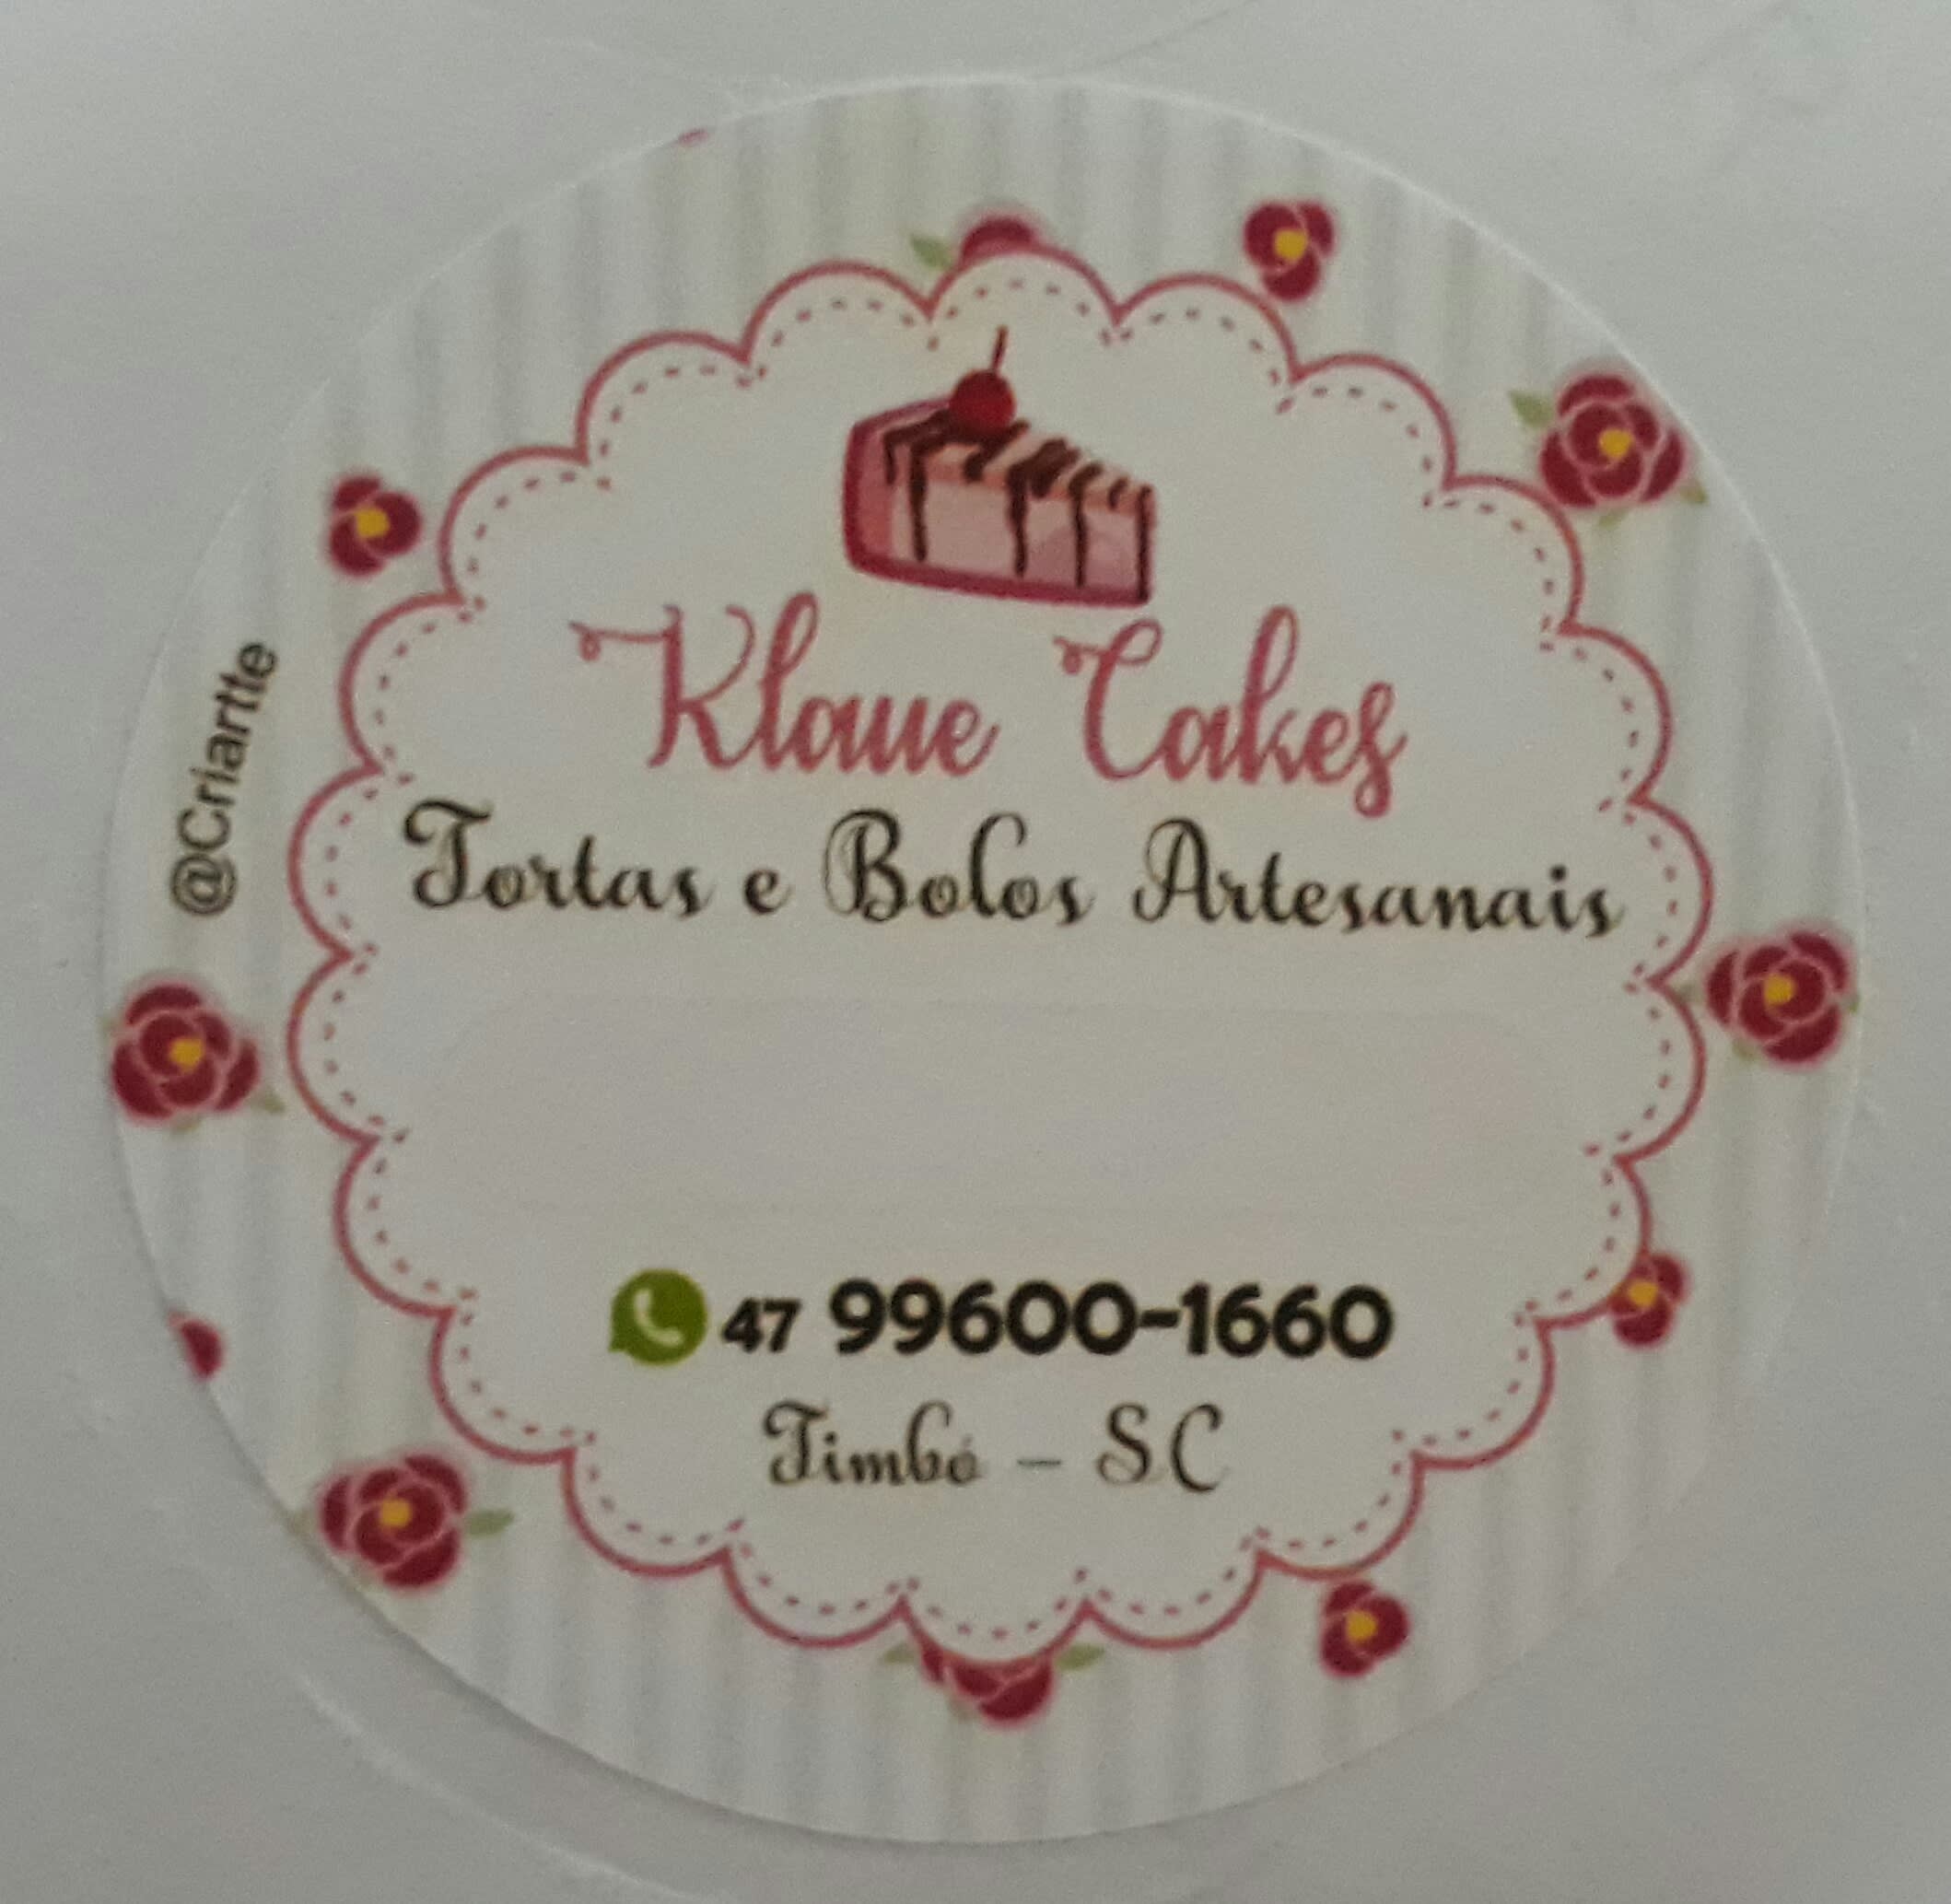 Klaue Cakes